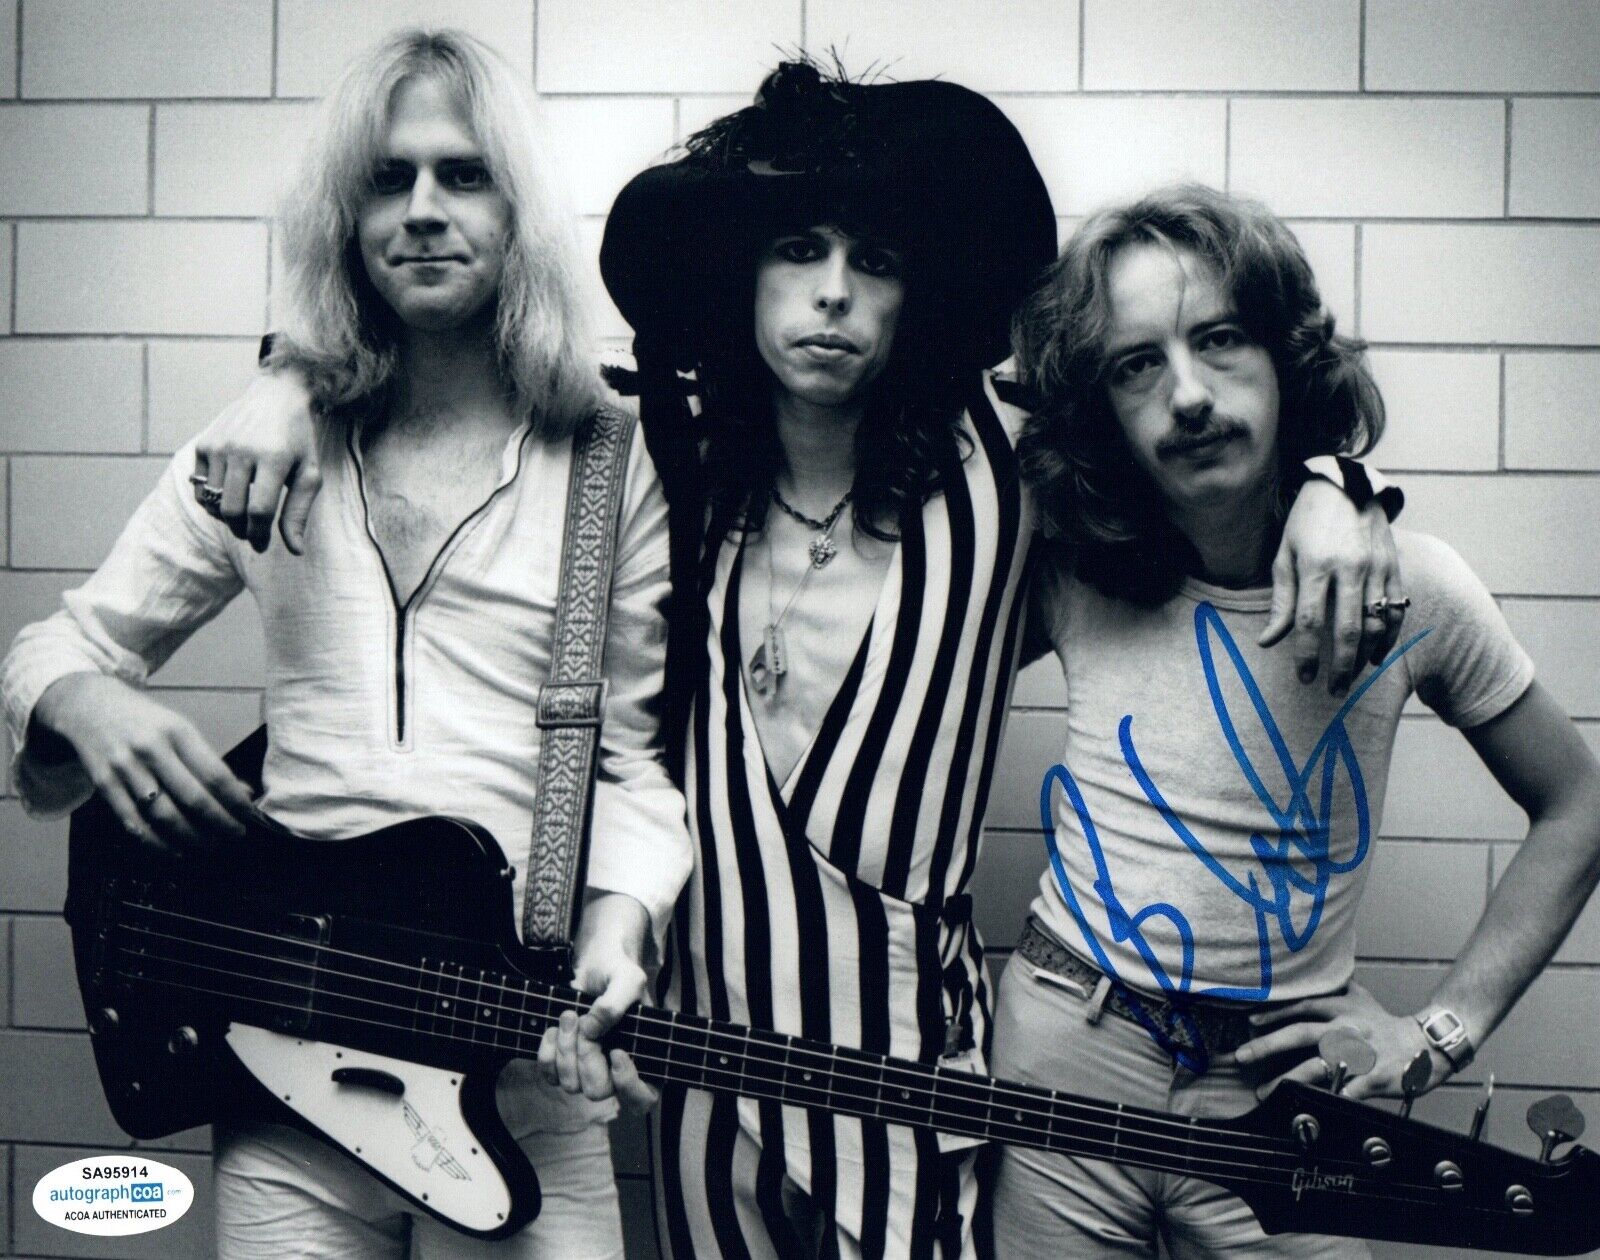 Brad Whitford Signed Autographed 8x10 Photo Poster painting Aerosmith Guitarist ACOA COA